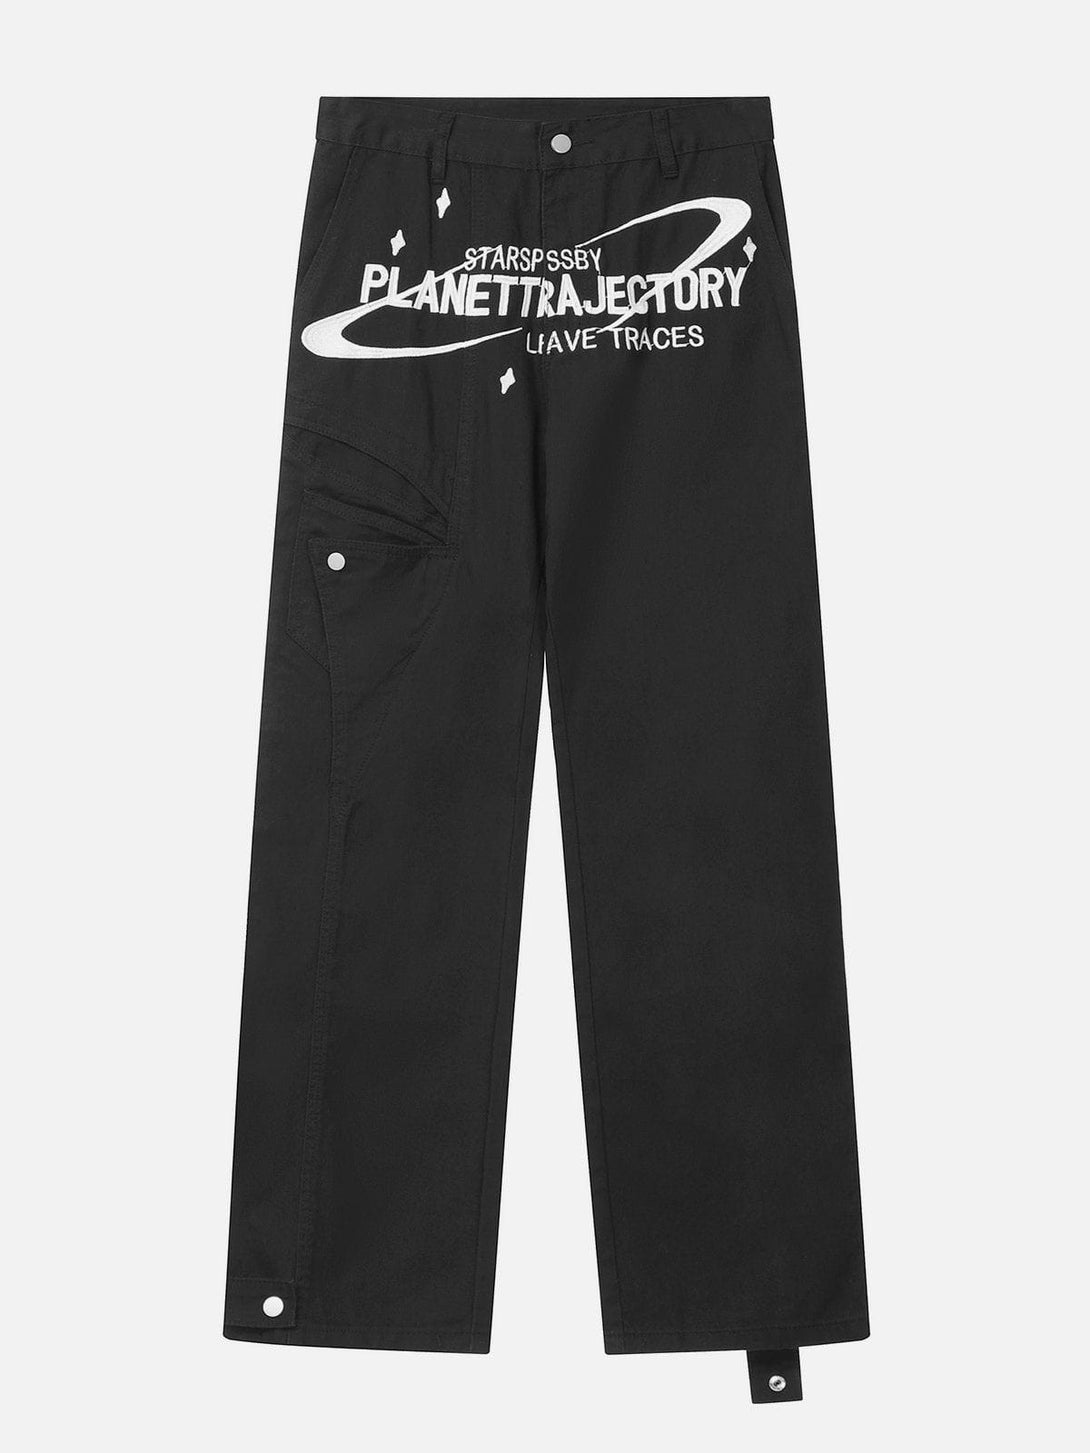 Majesda® - planetary trajectory Graphic Pants outfit ideas streetwear fashion